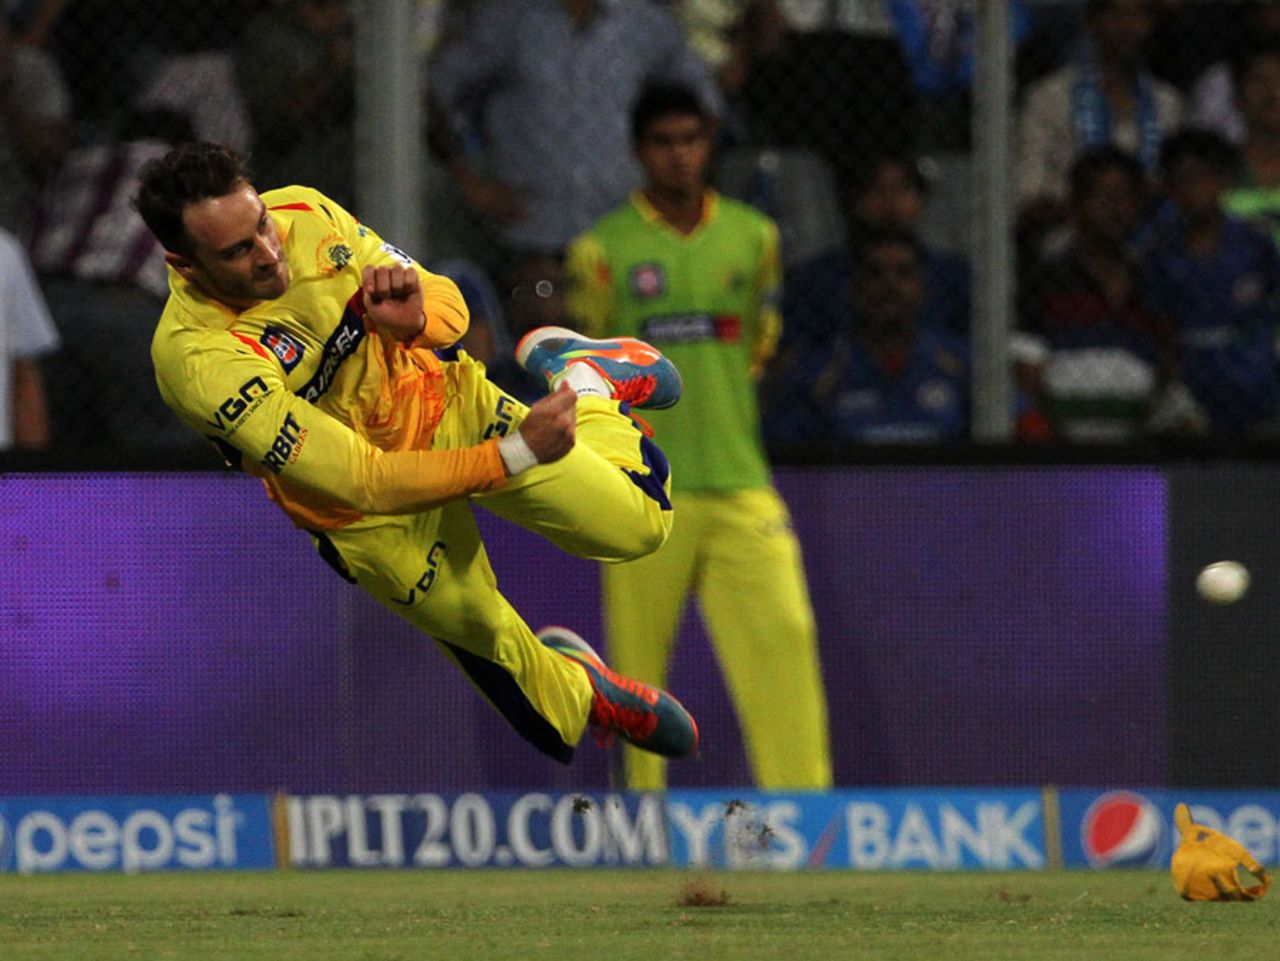 Faf du Plessis had a good day on the field, Mumbai Indians v Chennai Super Kings, IPL 2014, Mumbai, May 10, 2014